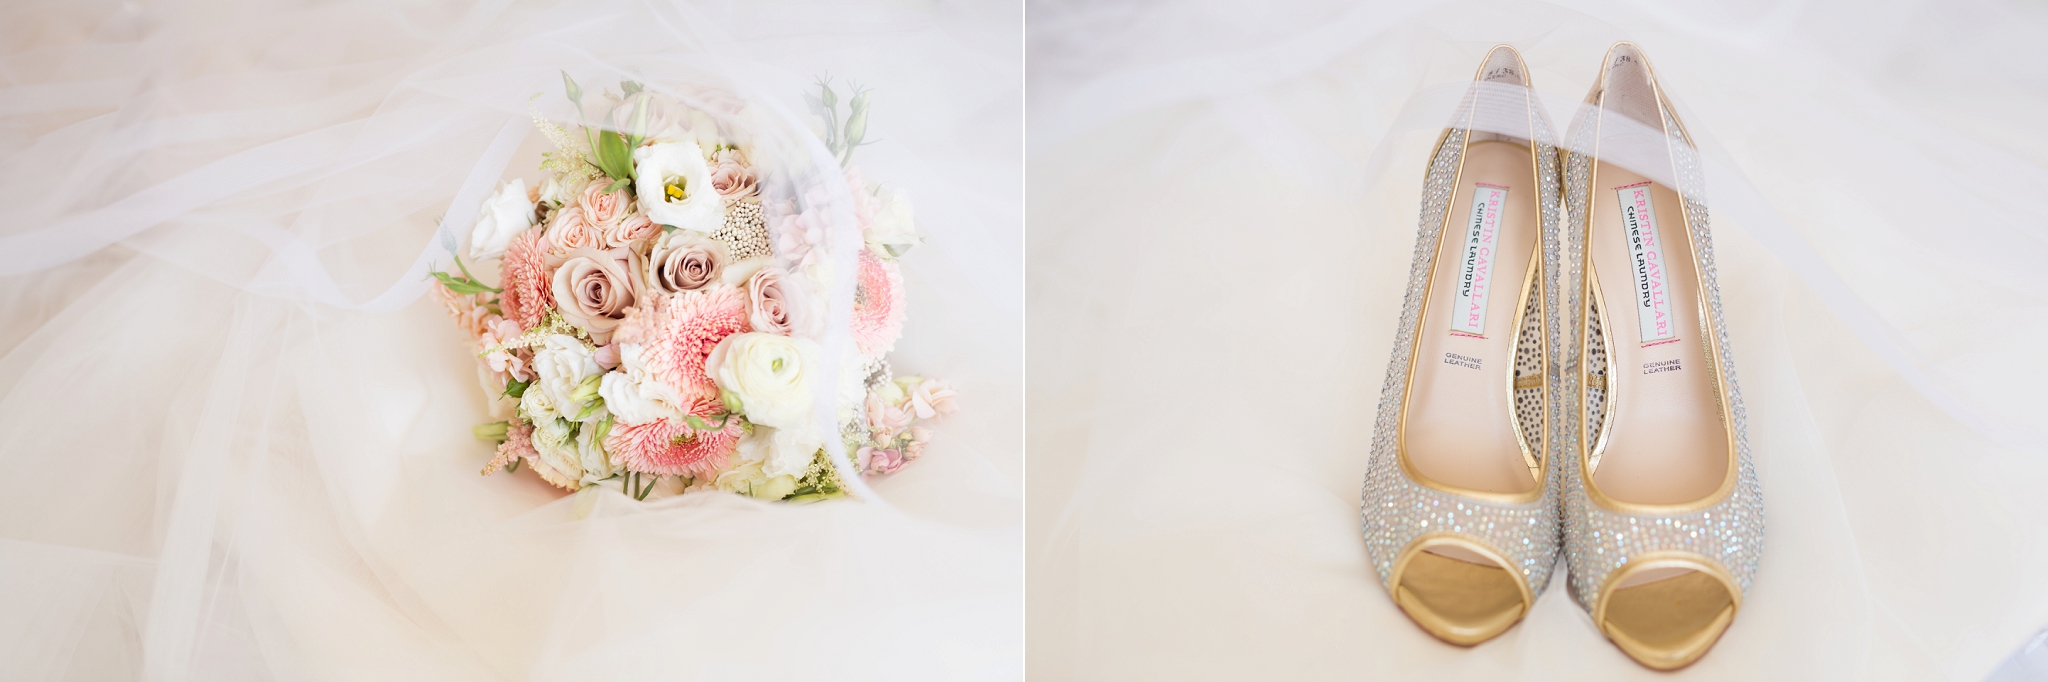 studio bloom wedding flowers